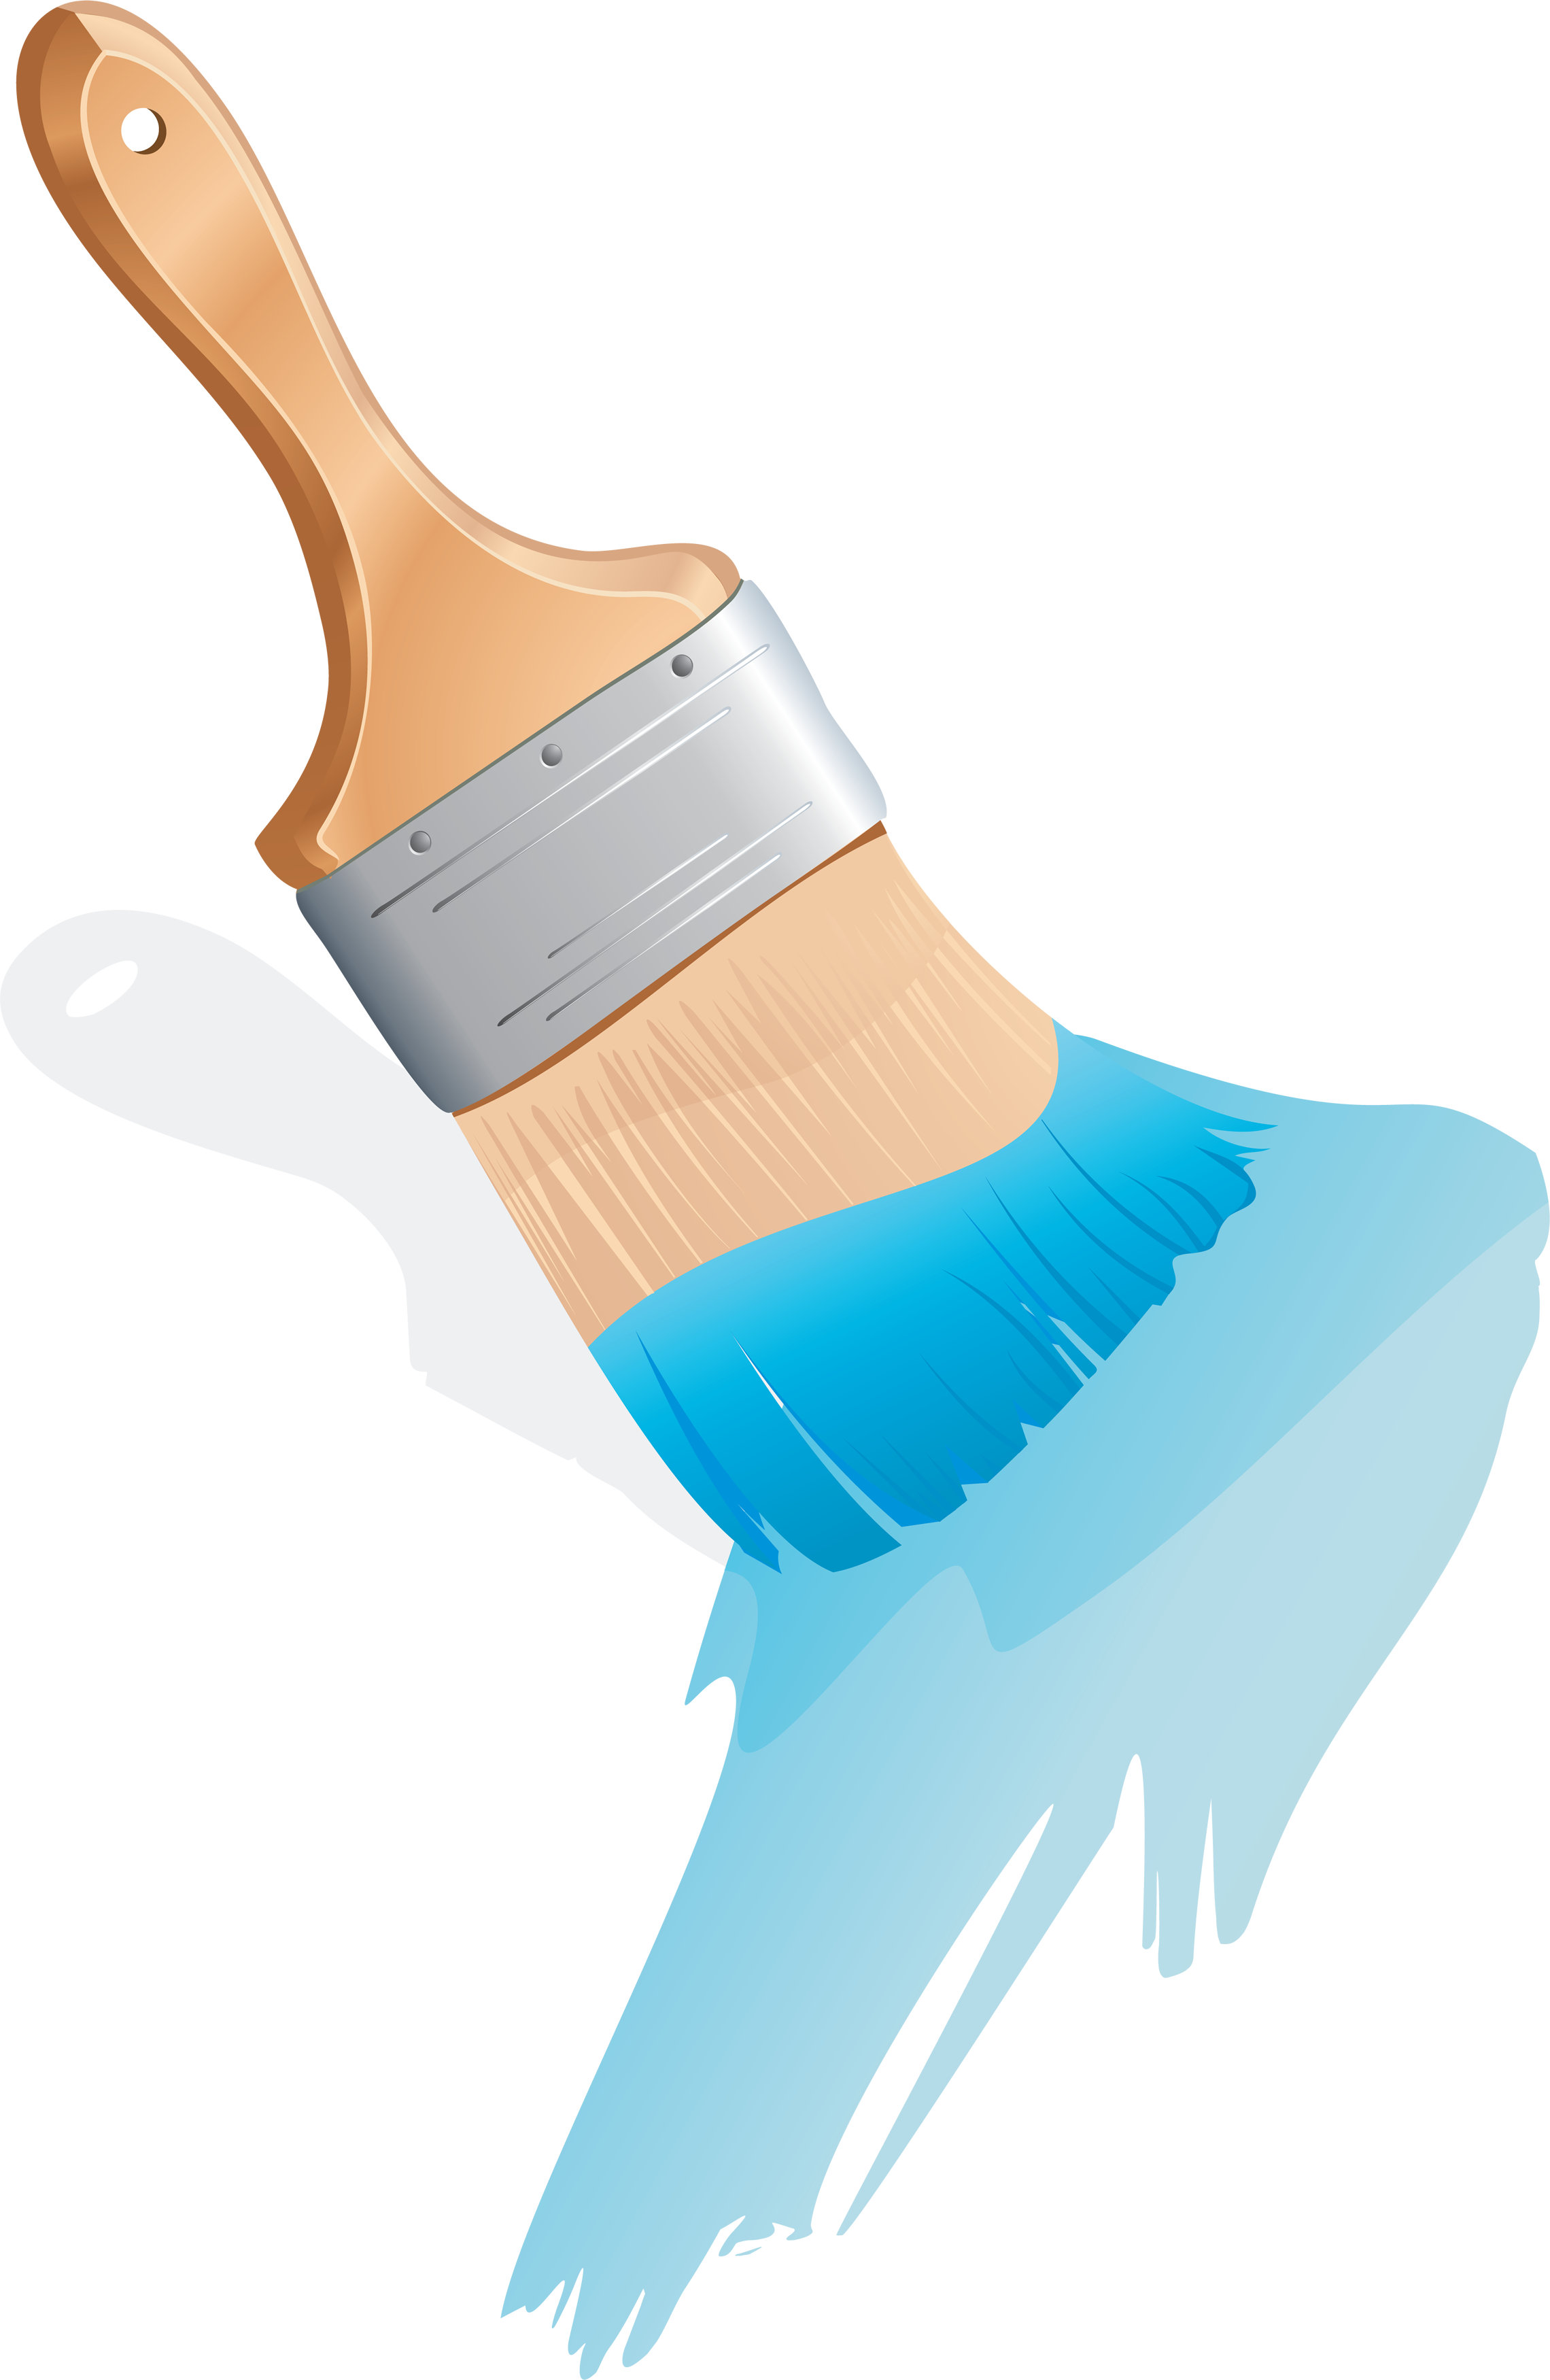 Paint brush png transparent. Hairbrush clipart blue